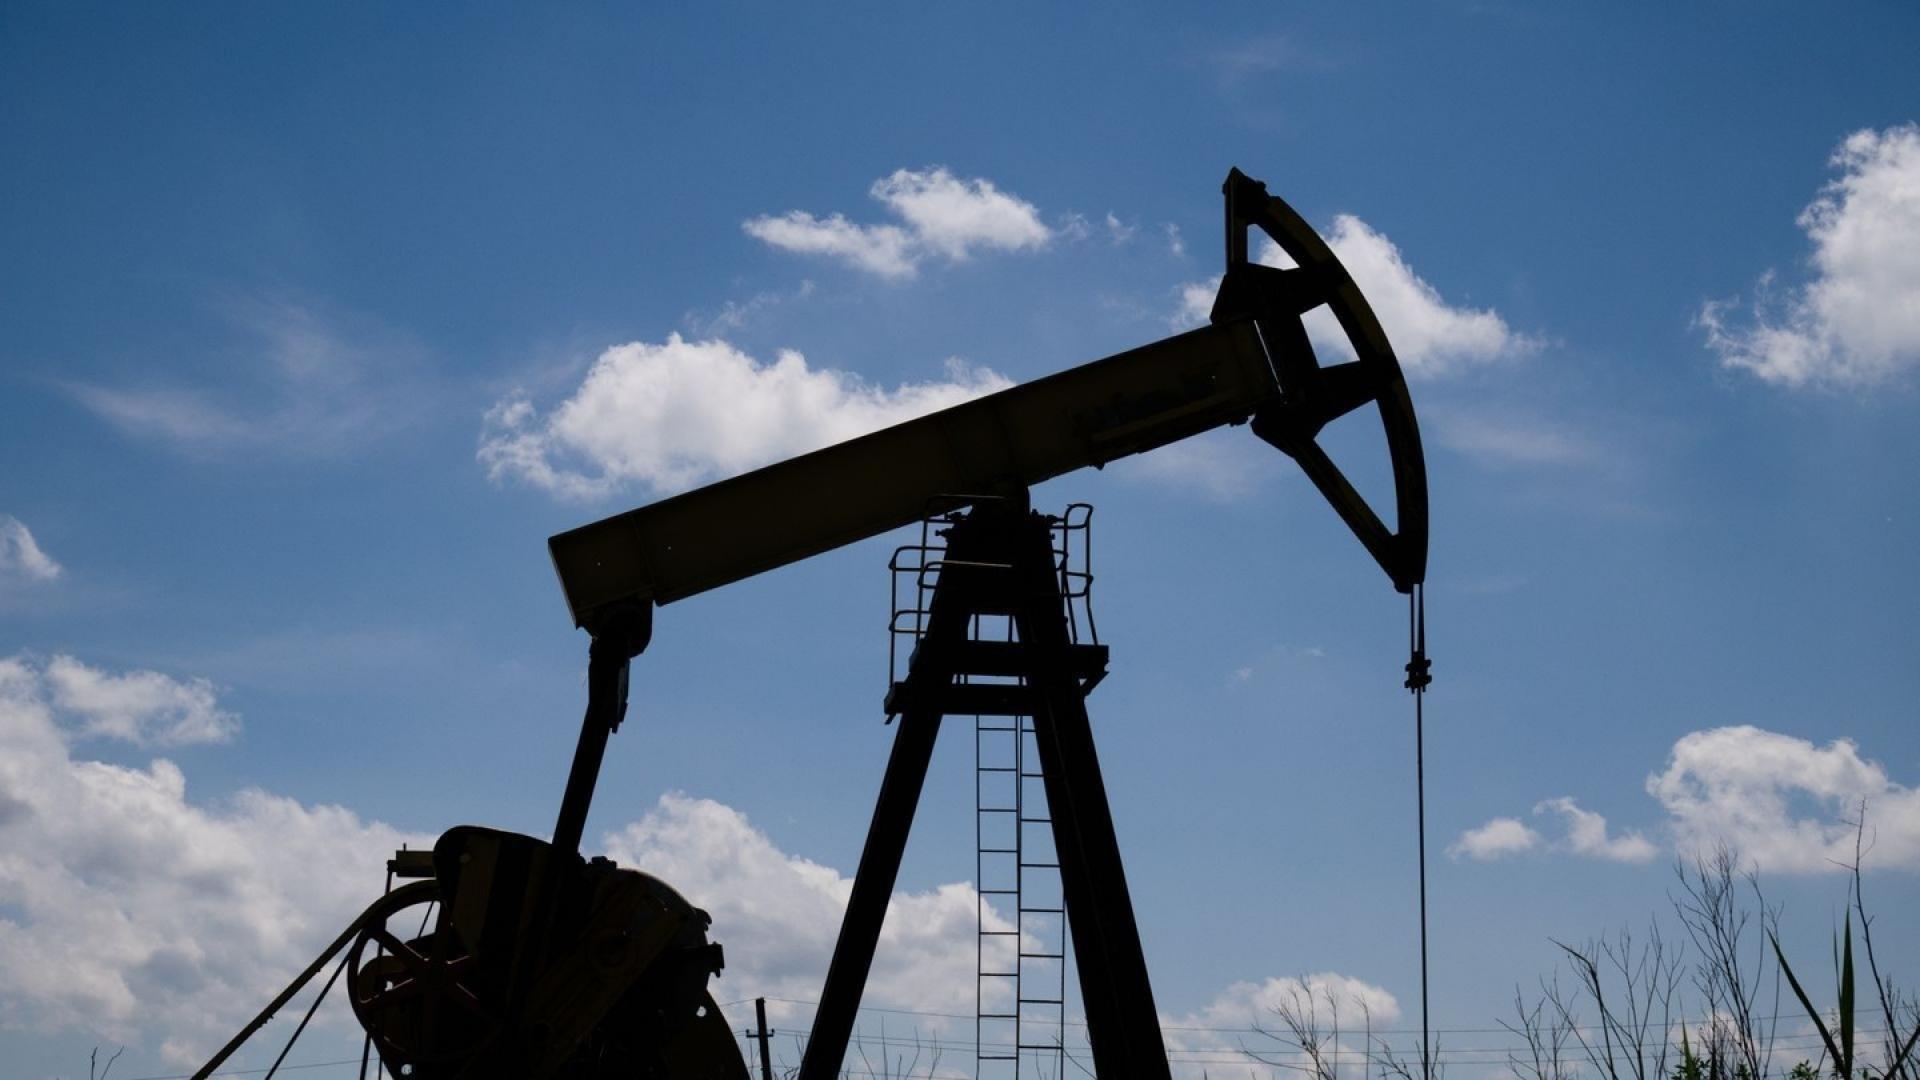 Россия сократила добычу нефти